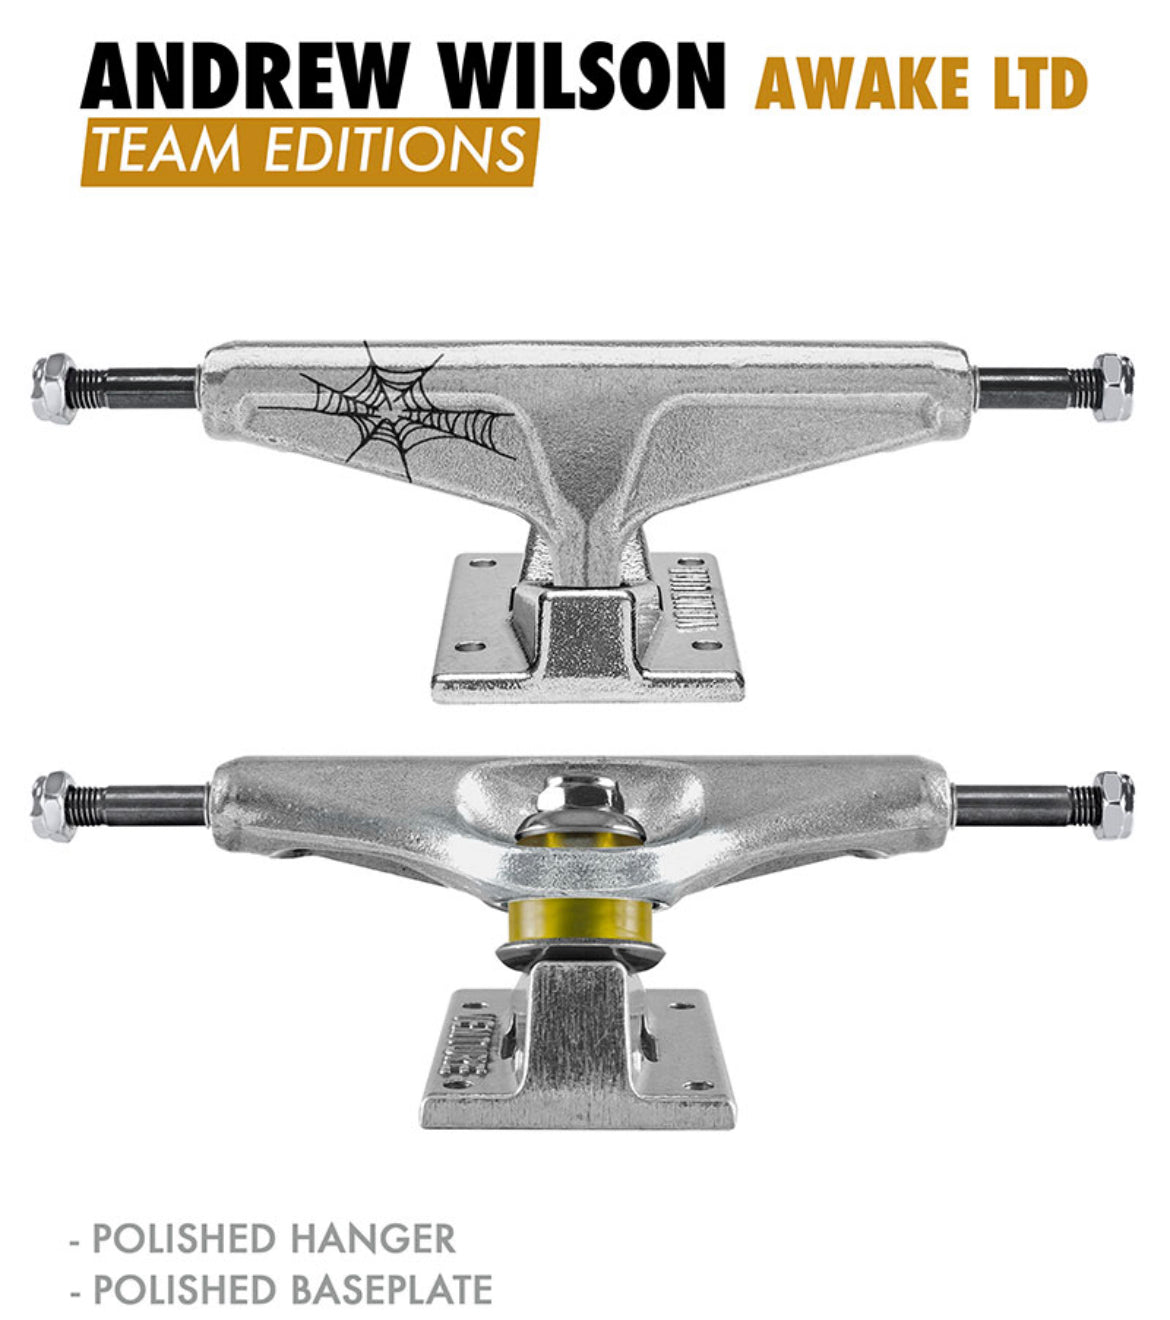 Venture Trucks - Andrew Wilson Awake Ltd. Team Editions